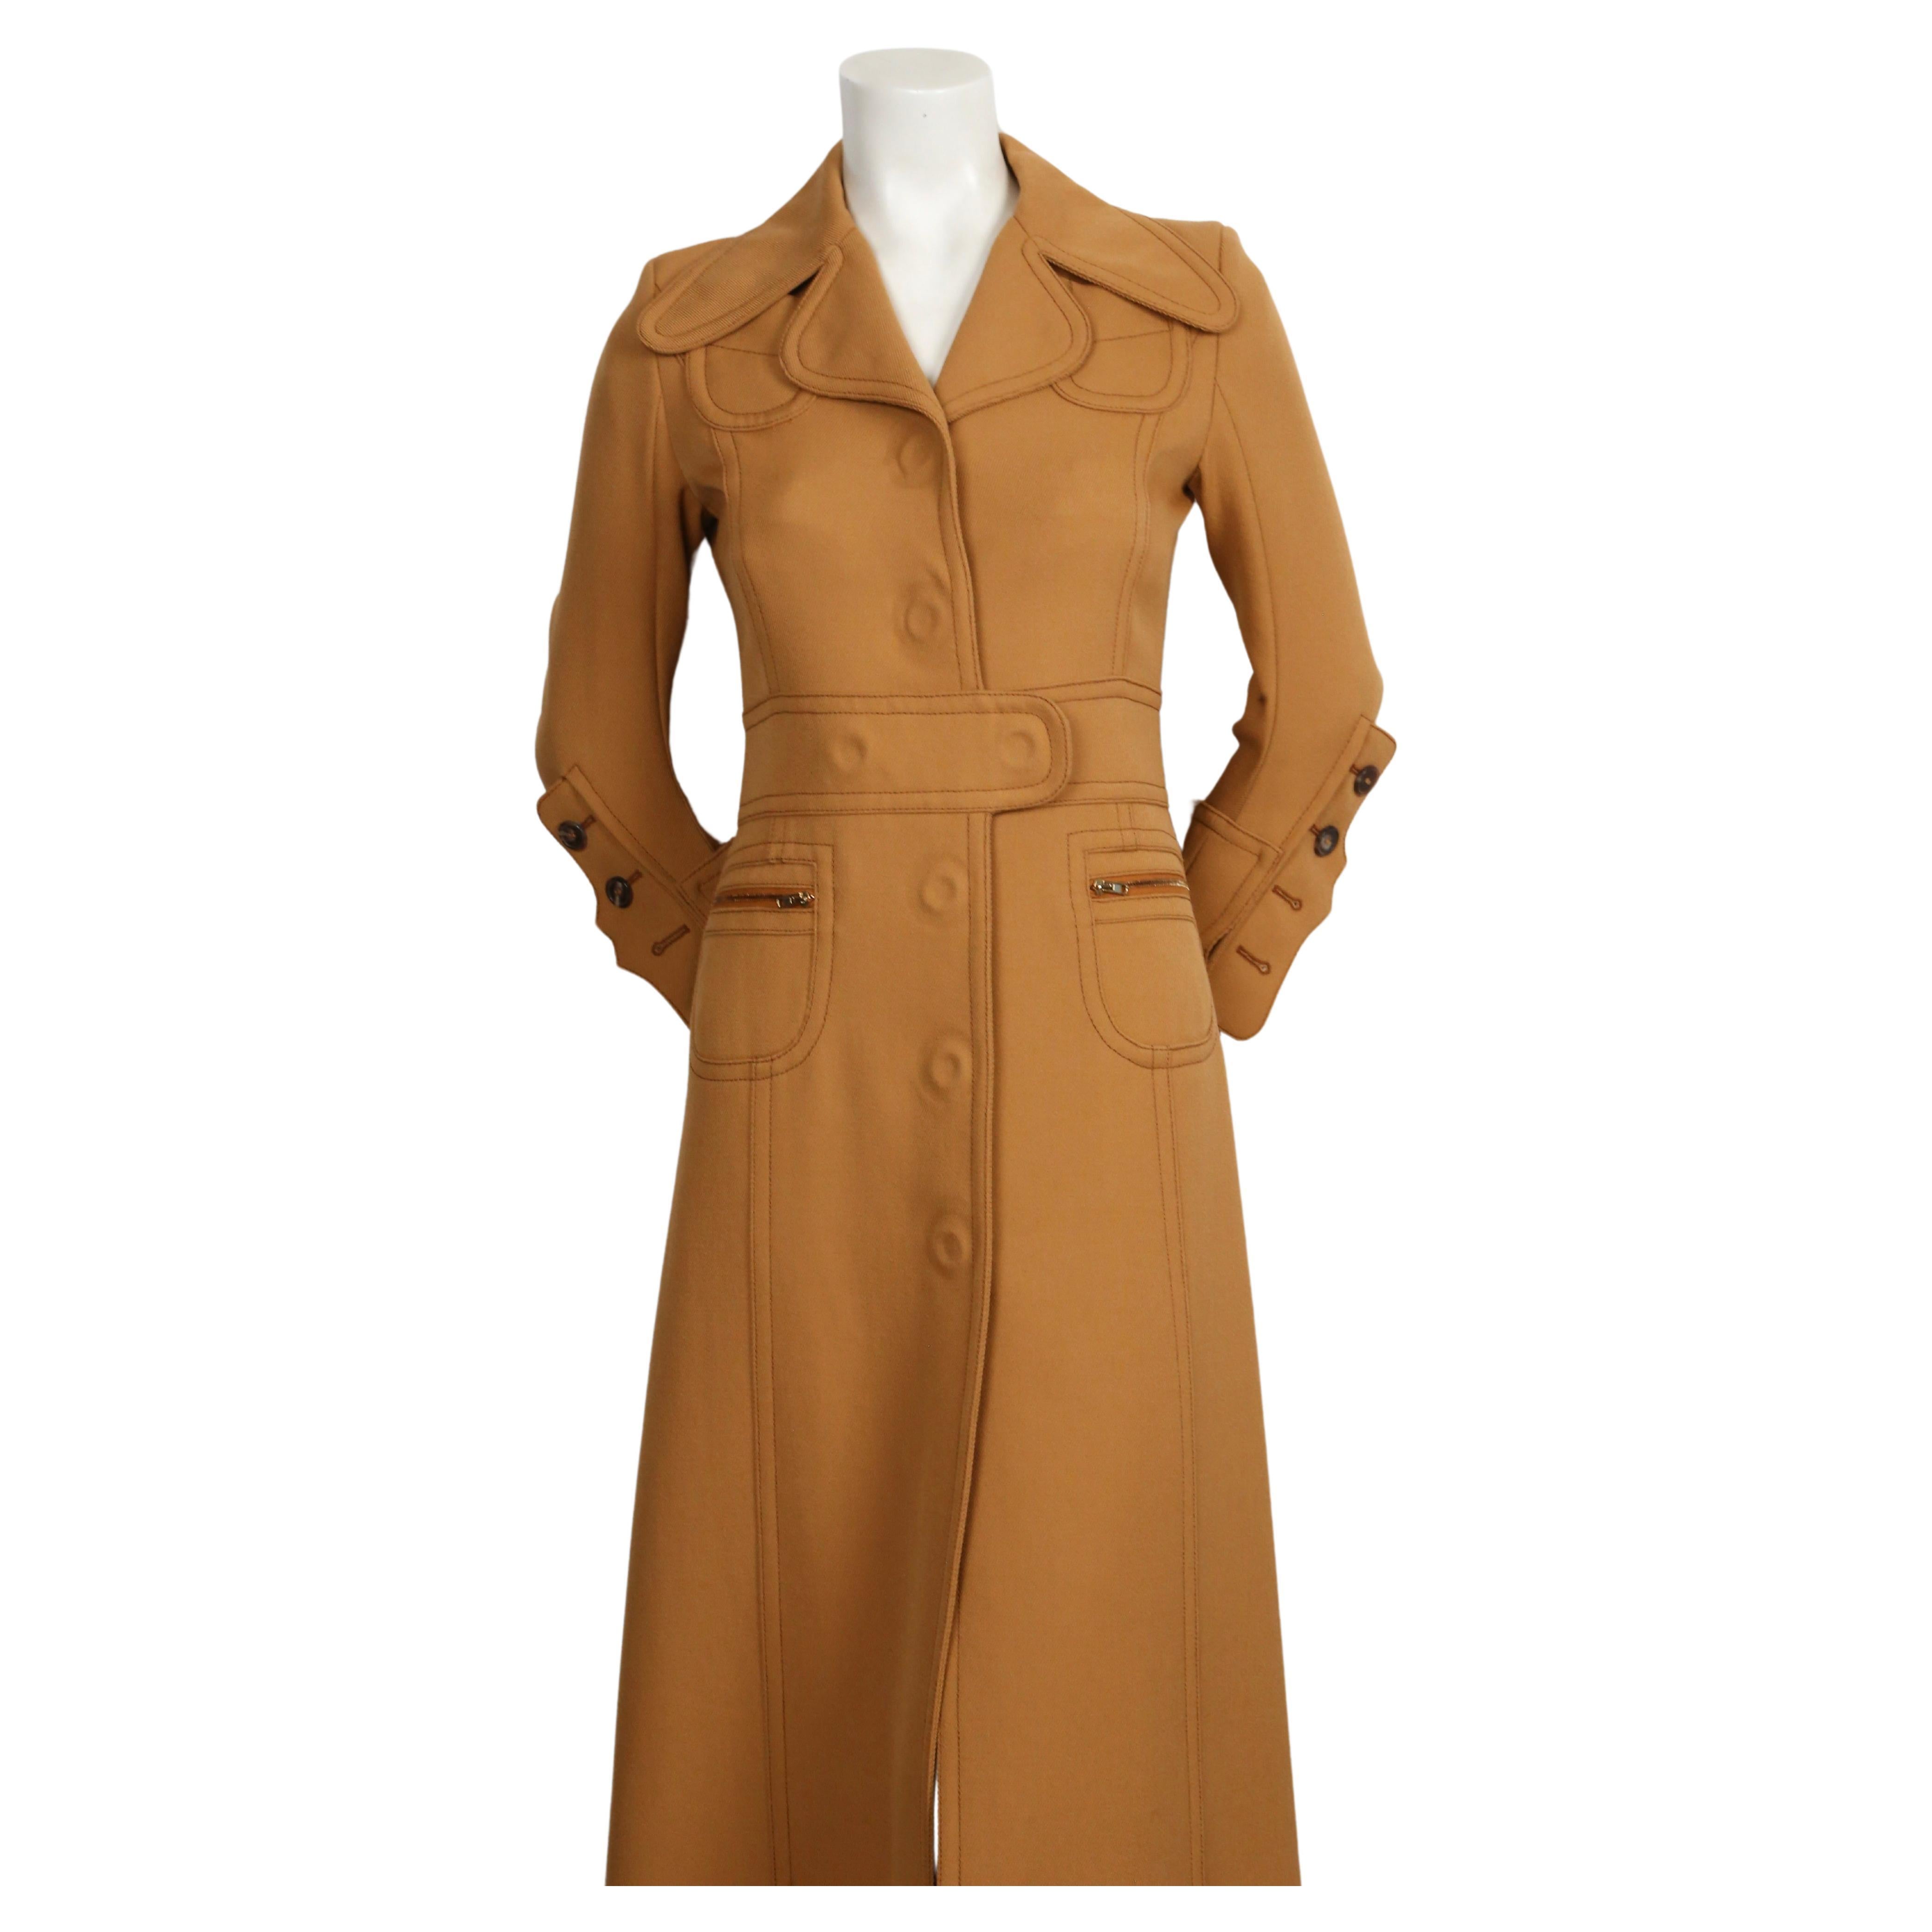 2014 MARGIELA by JOHN GALLIANO long gabardine RUNWAY coat In Good Condition For Sale In San Fransisco, CA